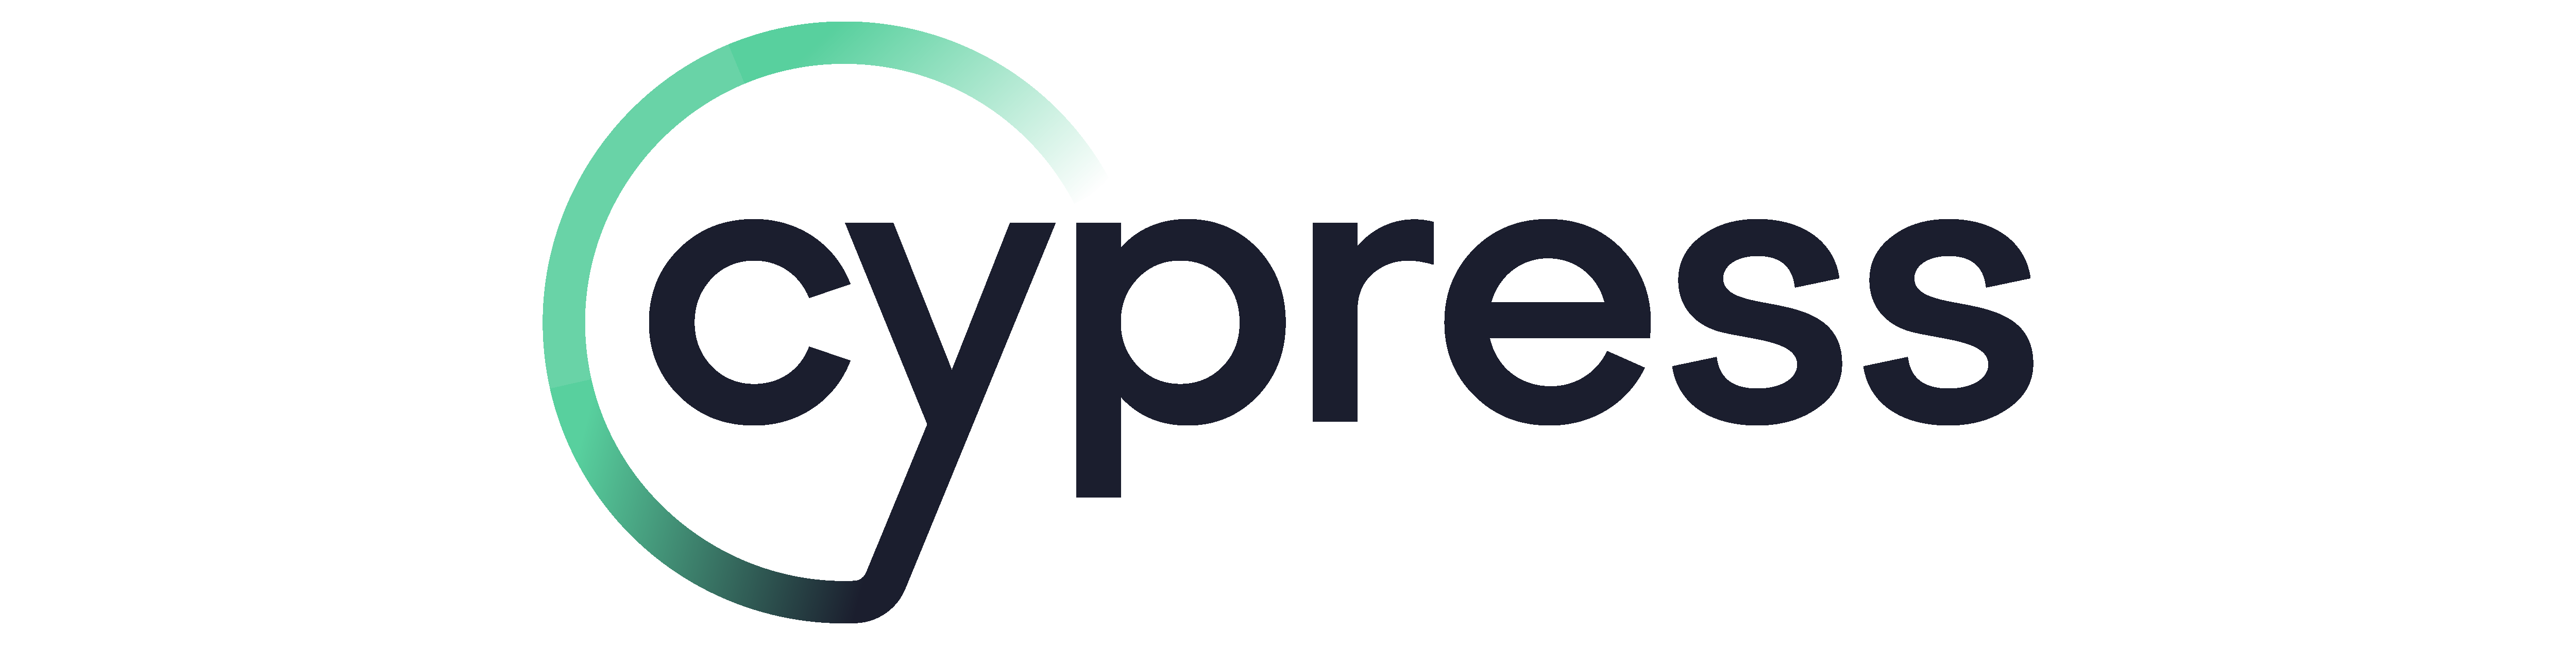 logo cypress - partenaire gravity